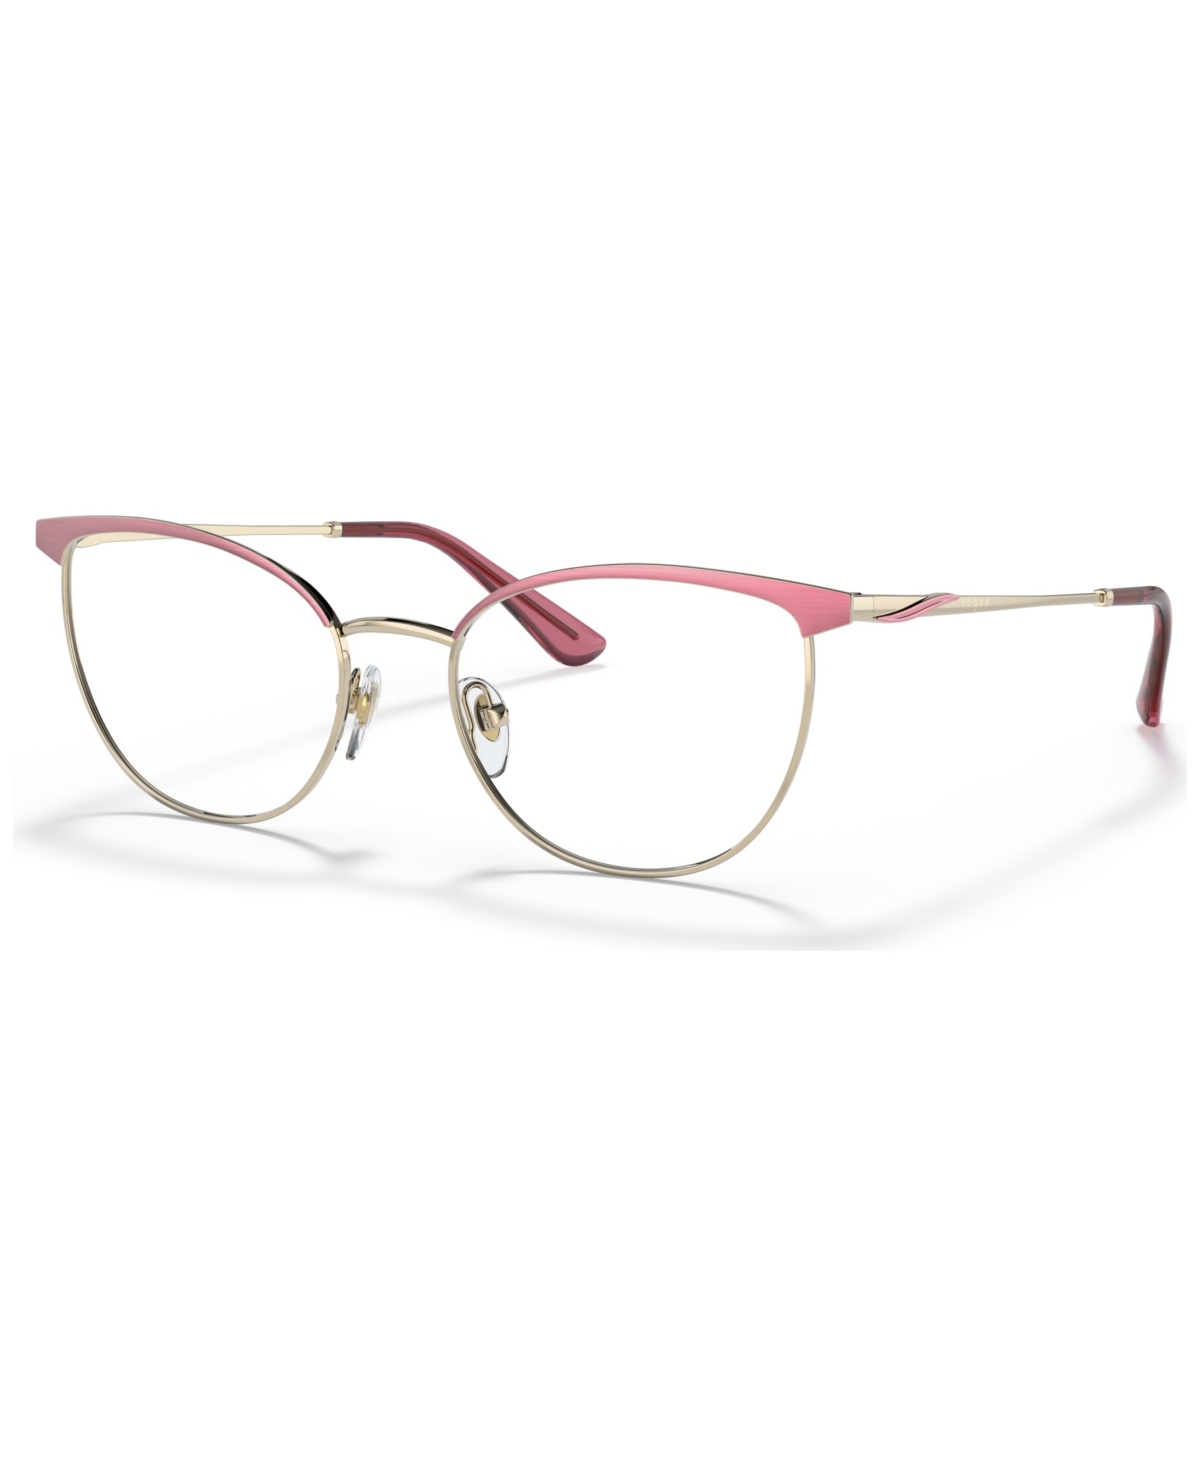 Women's Eyeglasses, VO4208 - Top Pink, Pale Gold